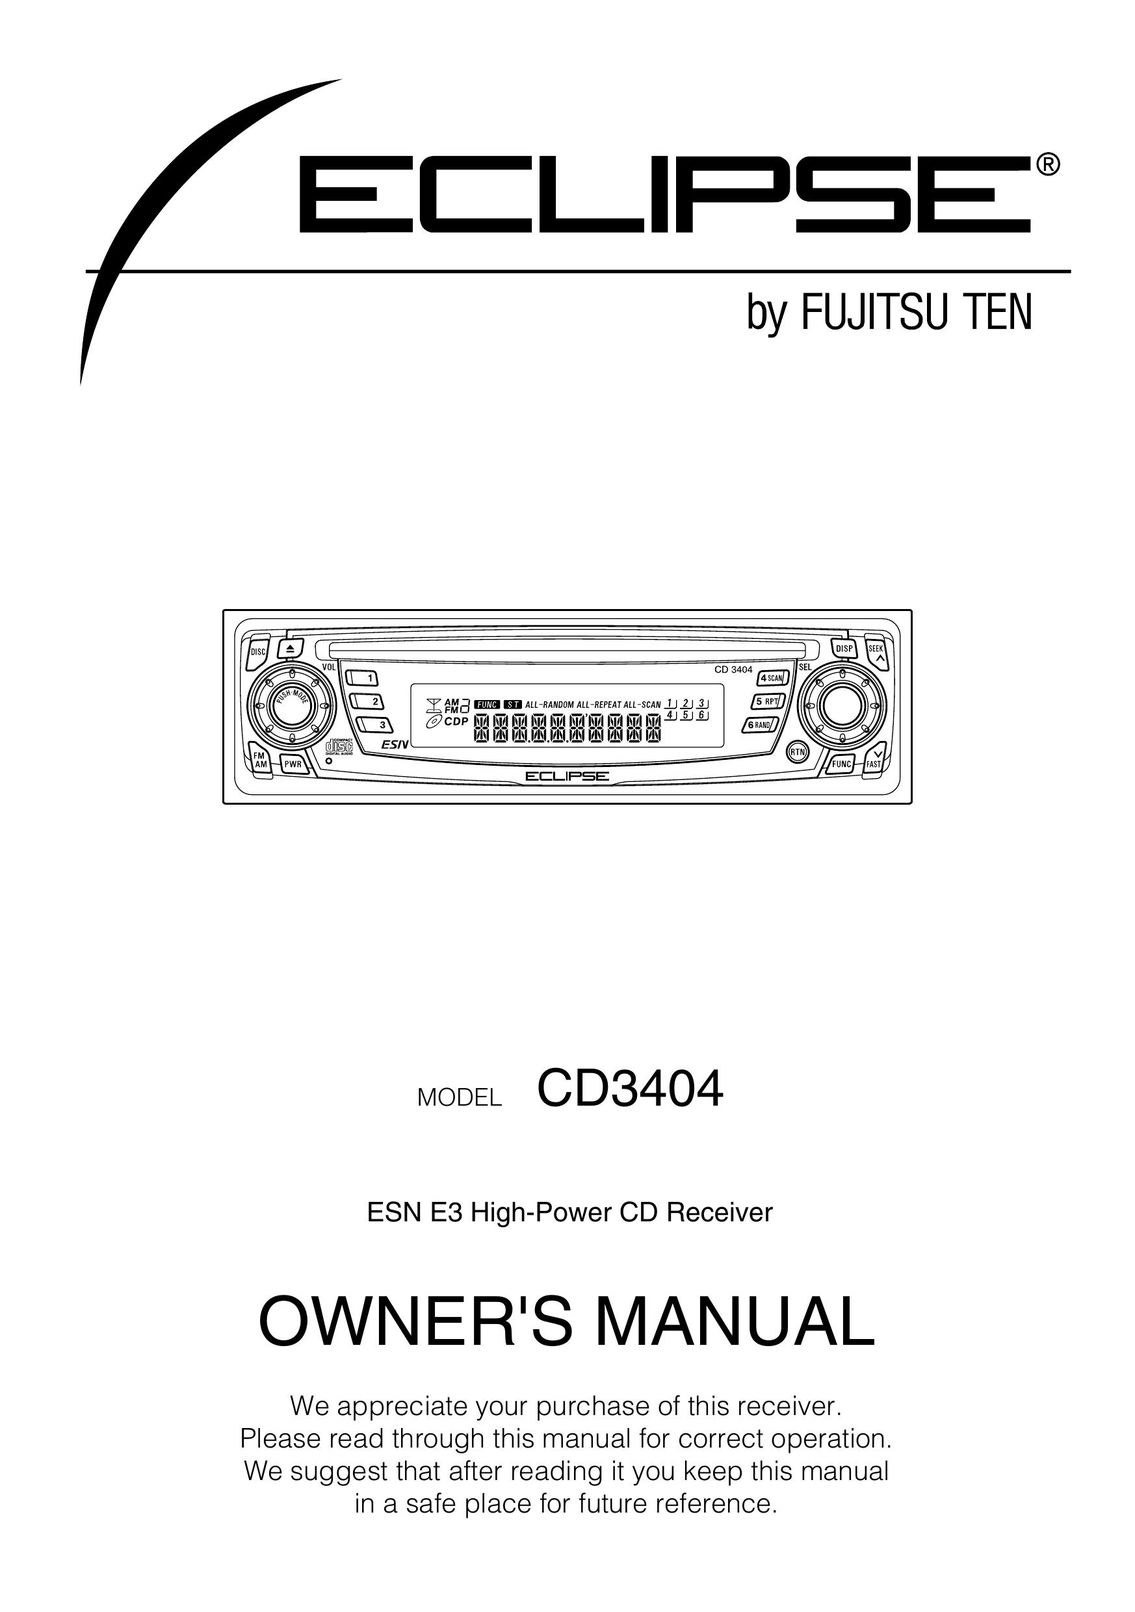 Eclipse - Fujitsu Ten CD3404 Car Stereo System User Manual